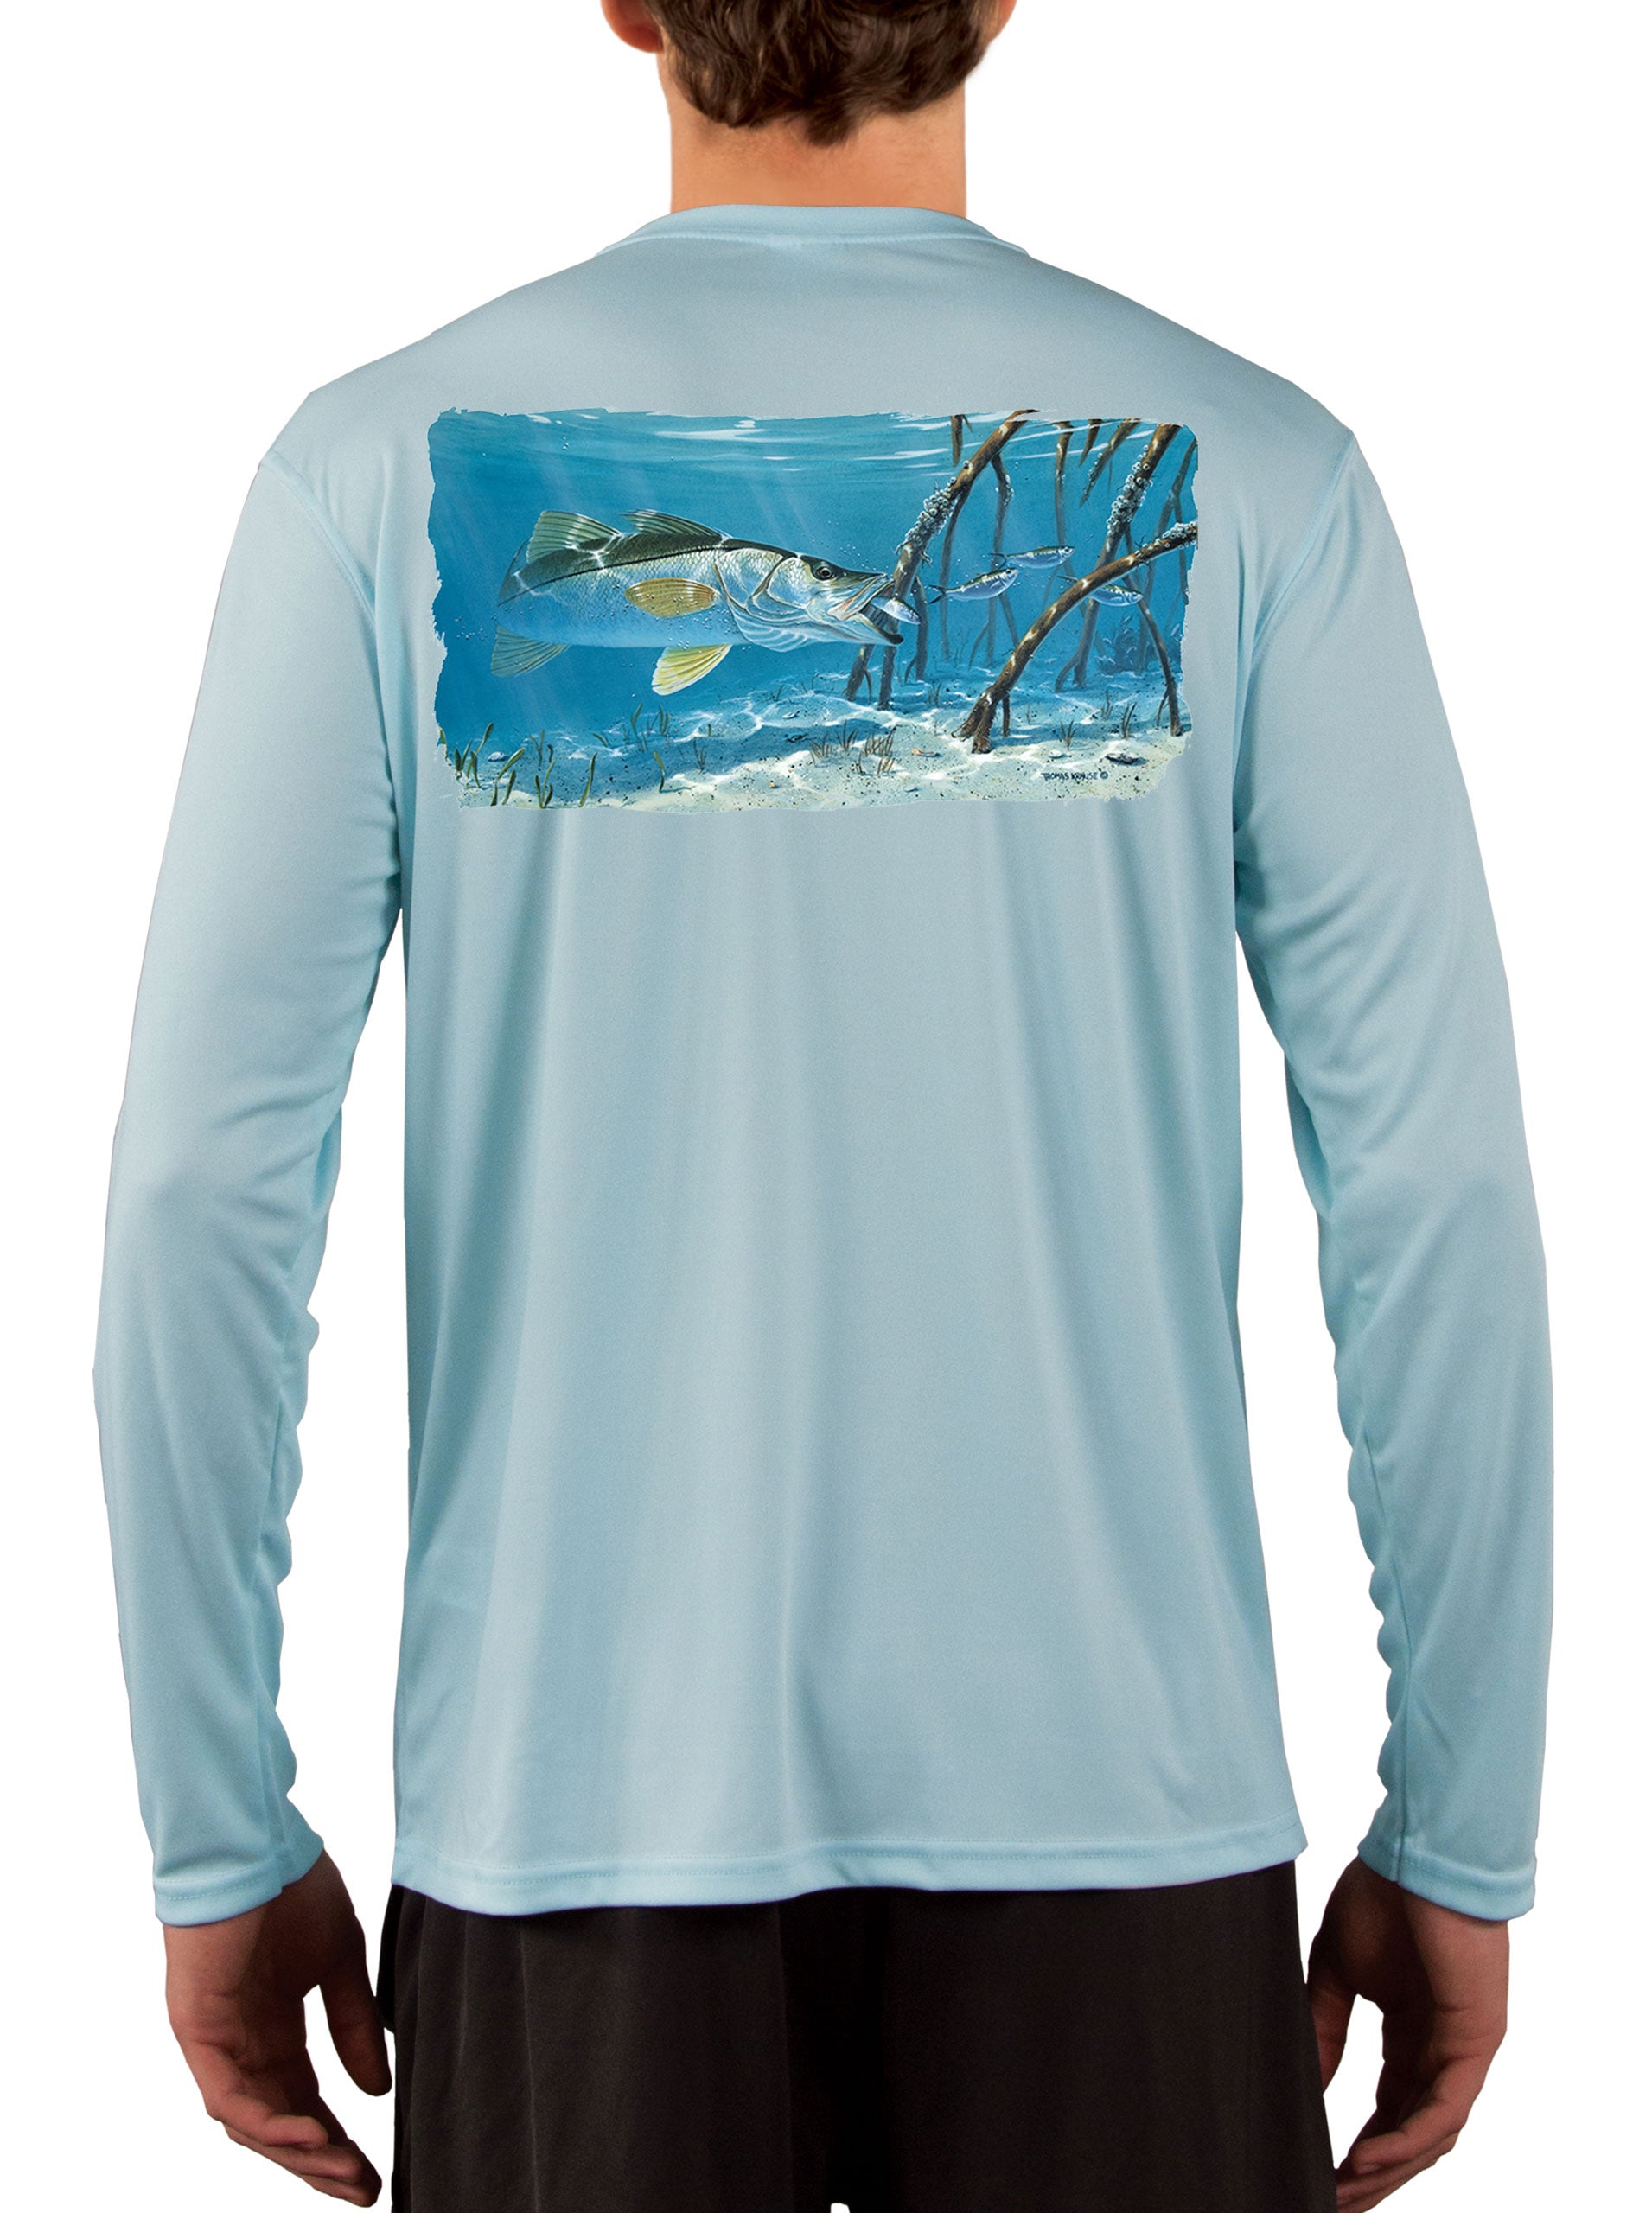 Skiff Life Snook Tree Hugger Fishing Shirts Men's Quick Dry Lightweight UPF 50+ Long Sleeve Shirts Rash Guard Swim Shirts Hiking Shirts Moisture